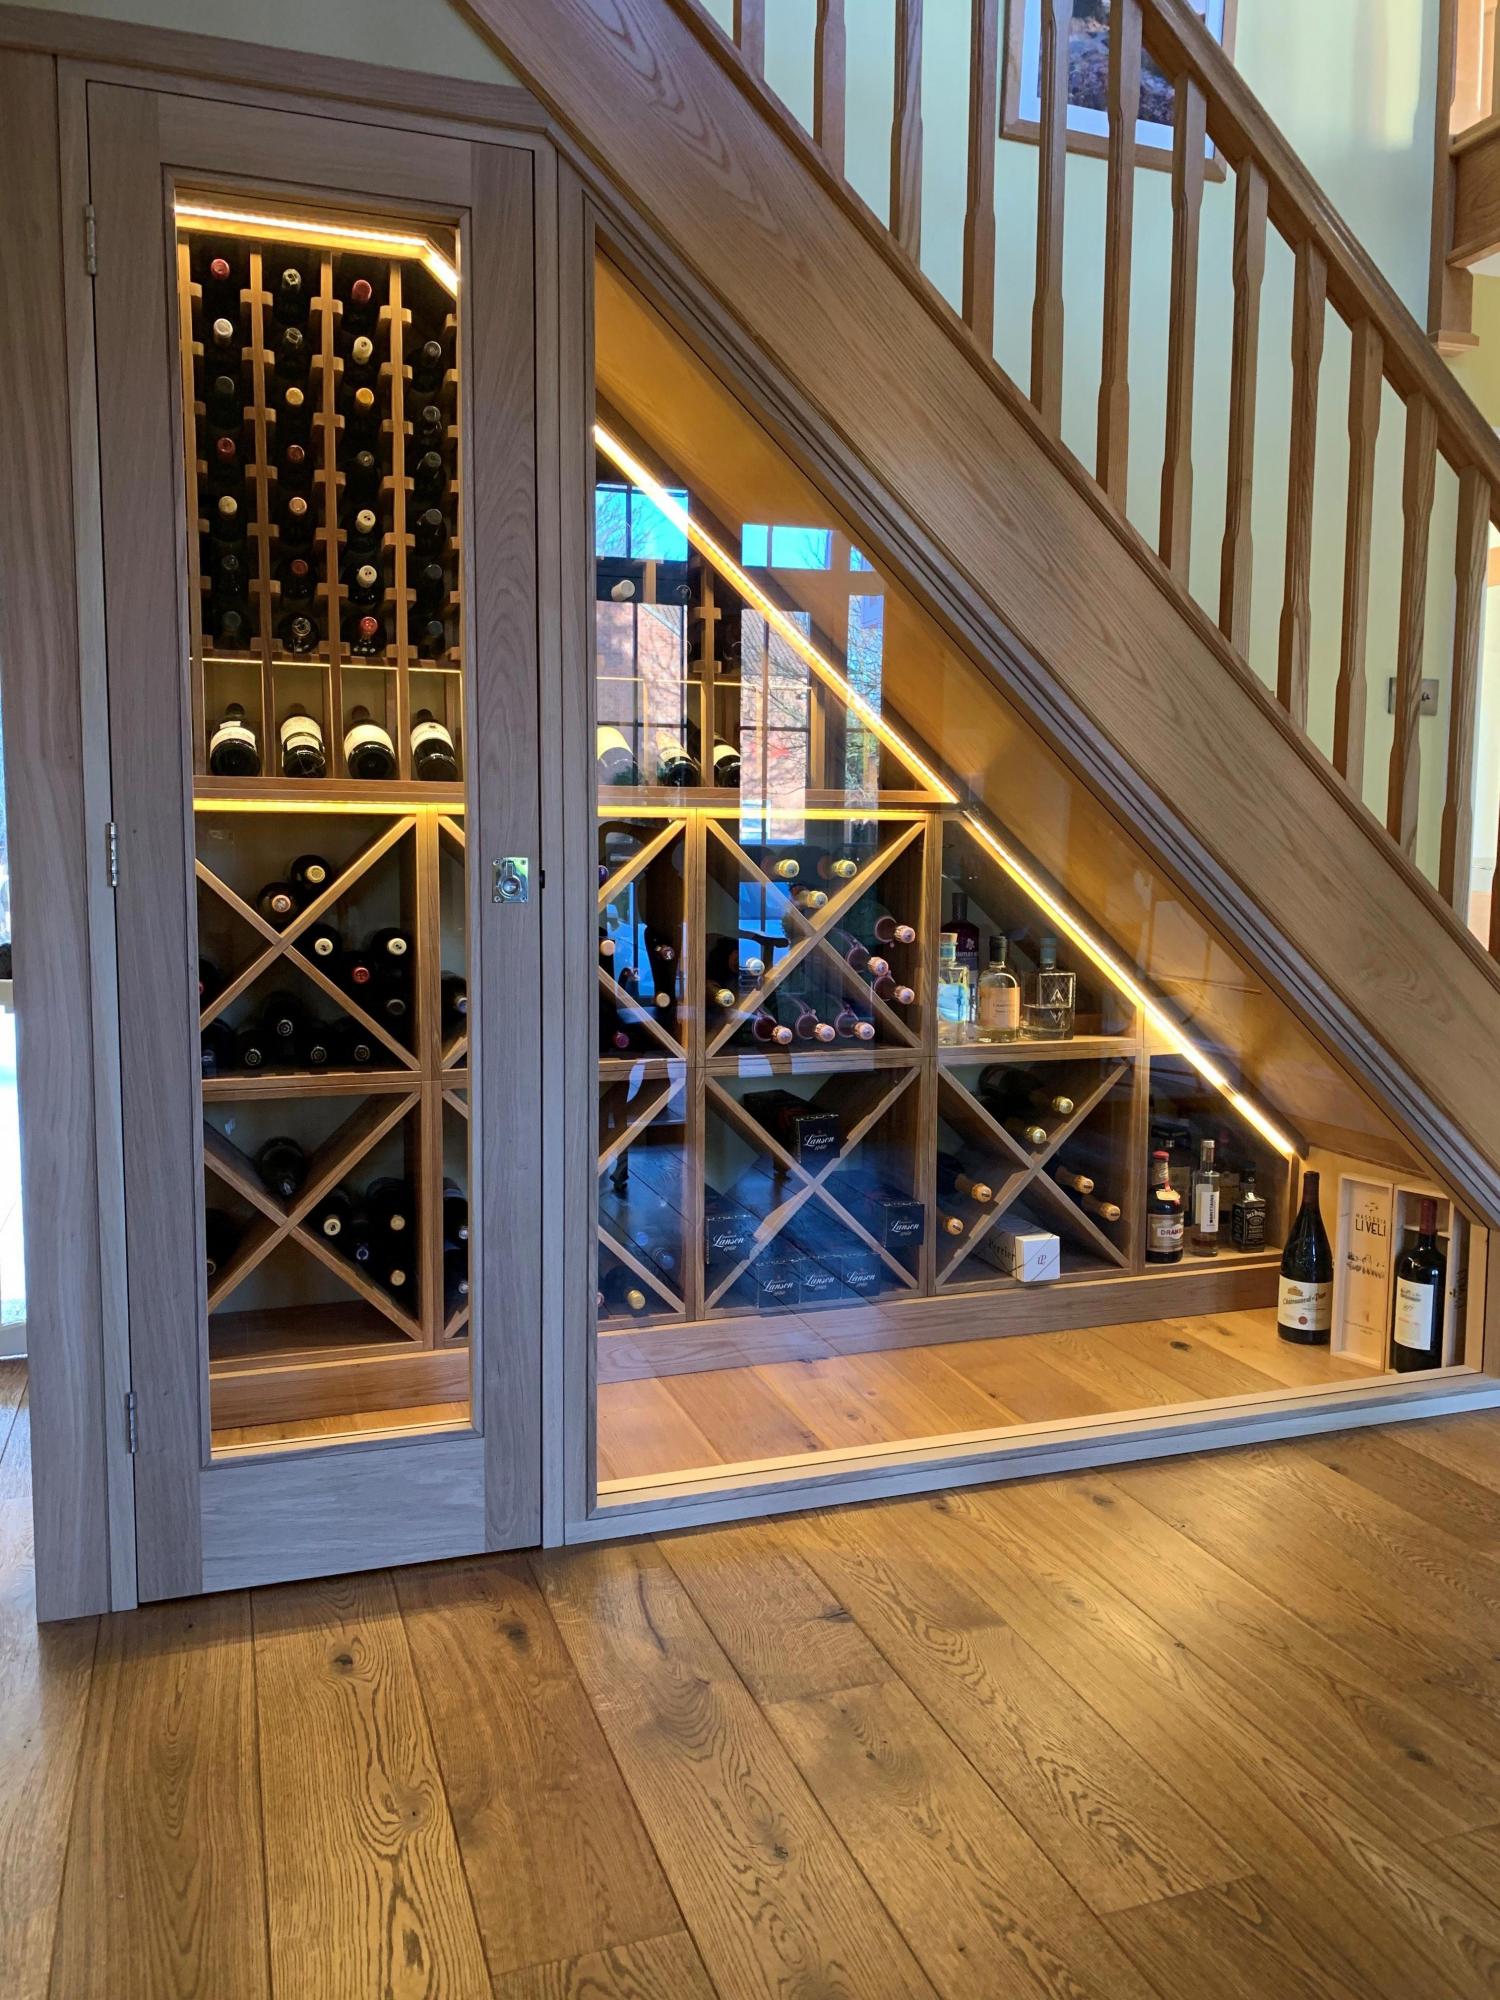 Most Creative Under The Stairs Home Designs - Wine cellar storage under the stairs